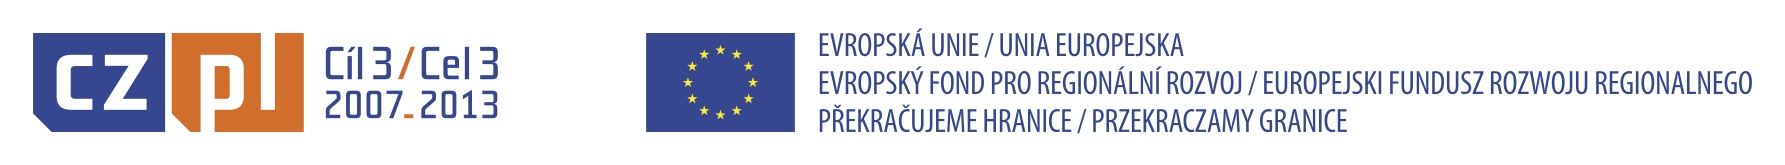 logotyp CZ-PL a symboly EU s texty (plnobarevné)